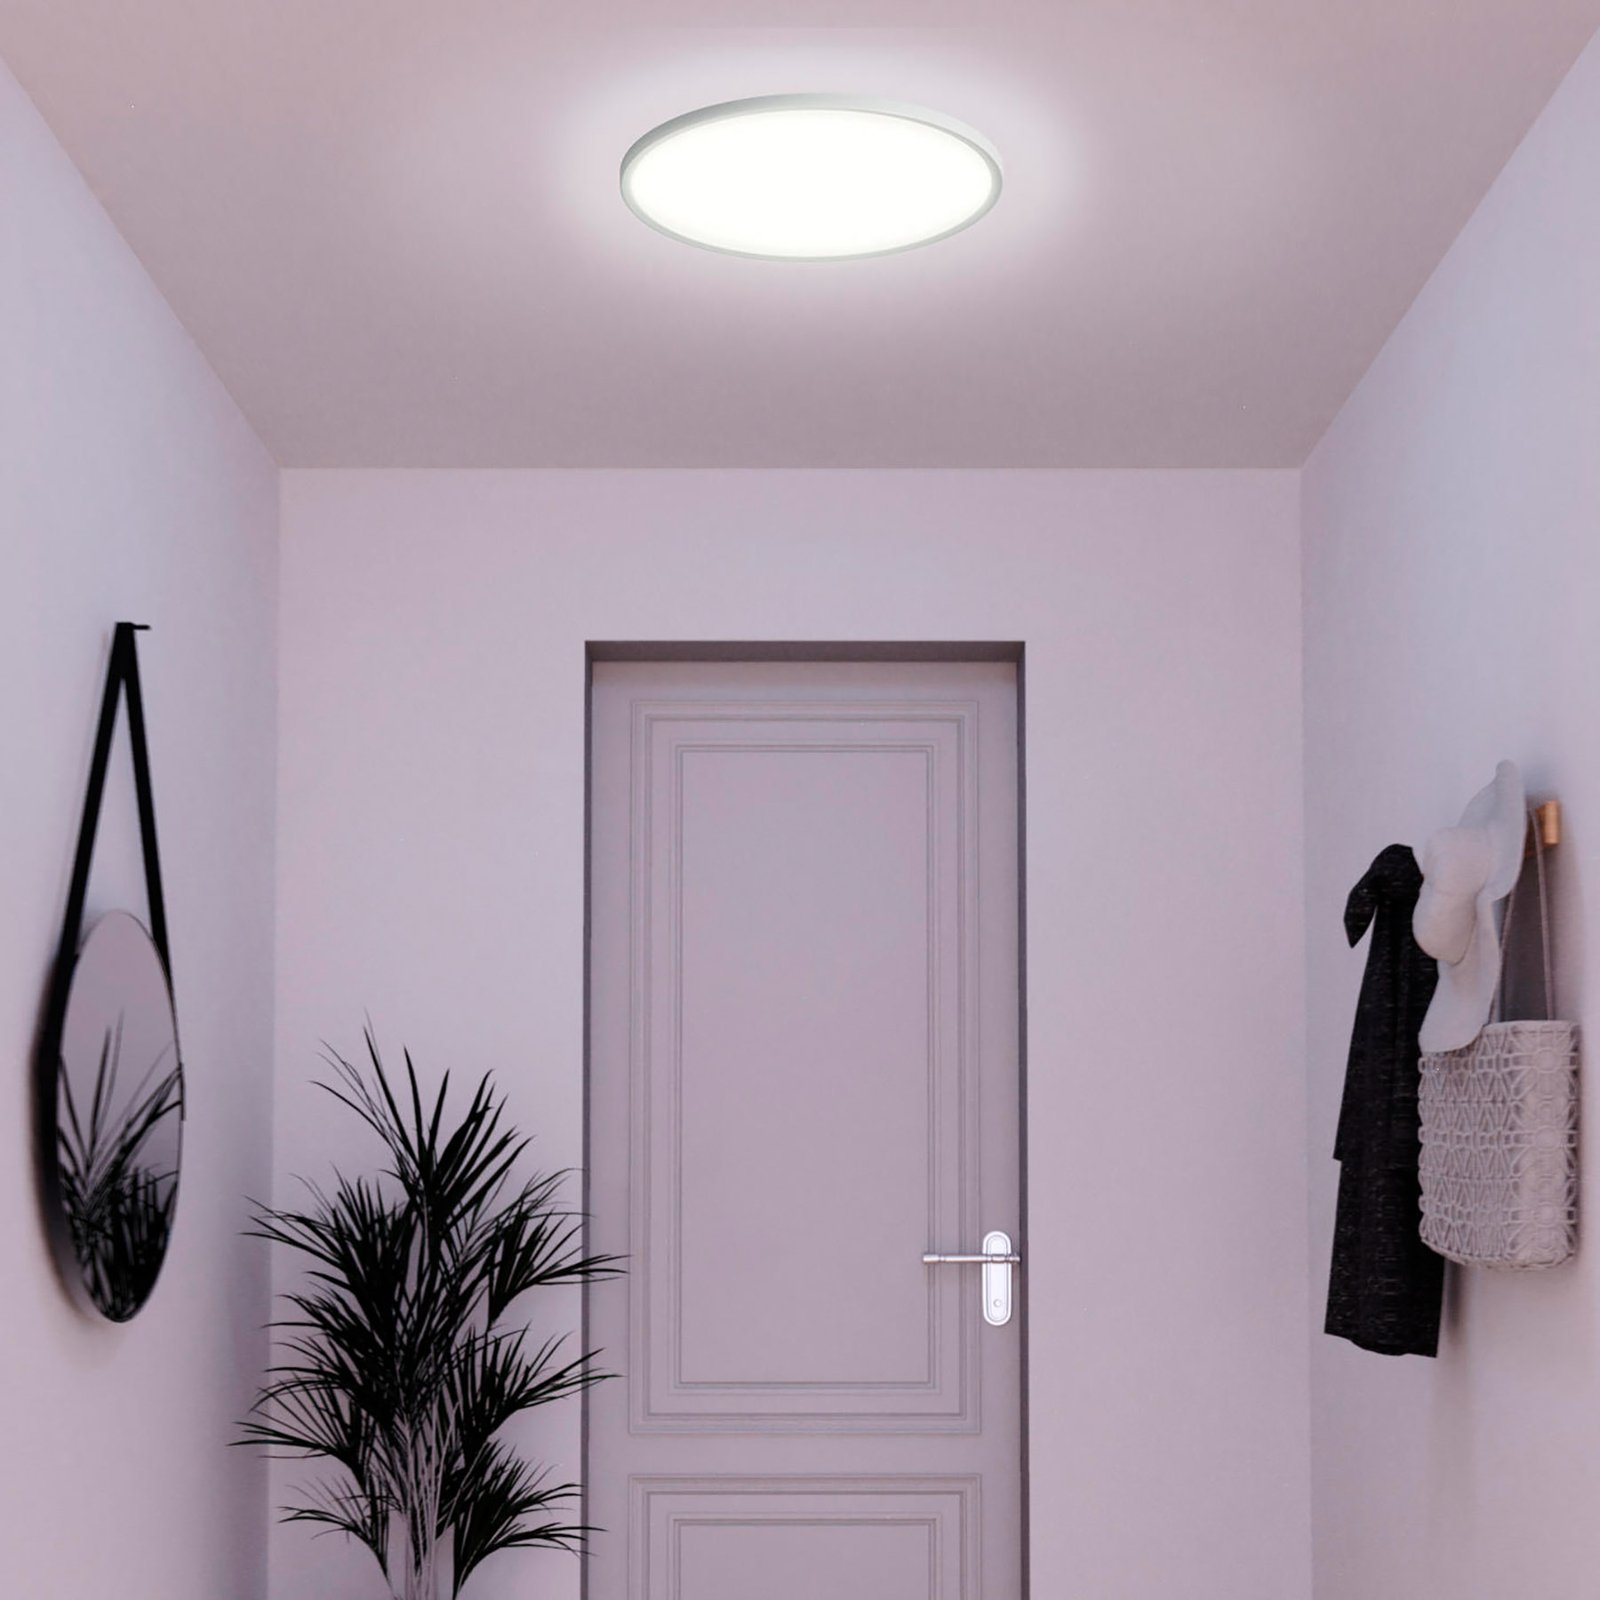 Müller Licht tint Smart LED plafondlamp Amela, Ø 50 cm